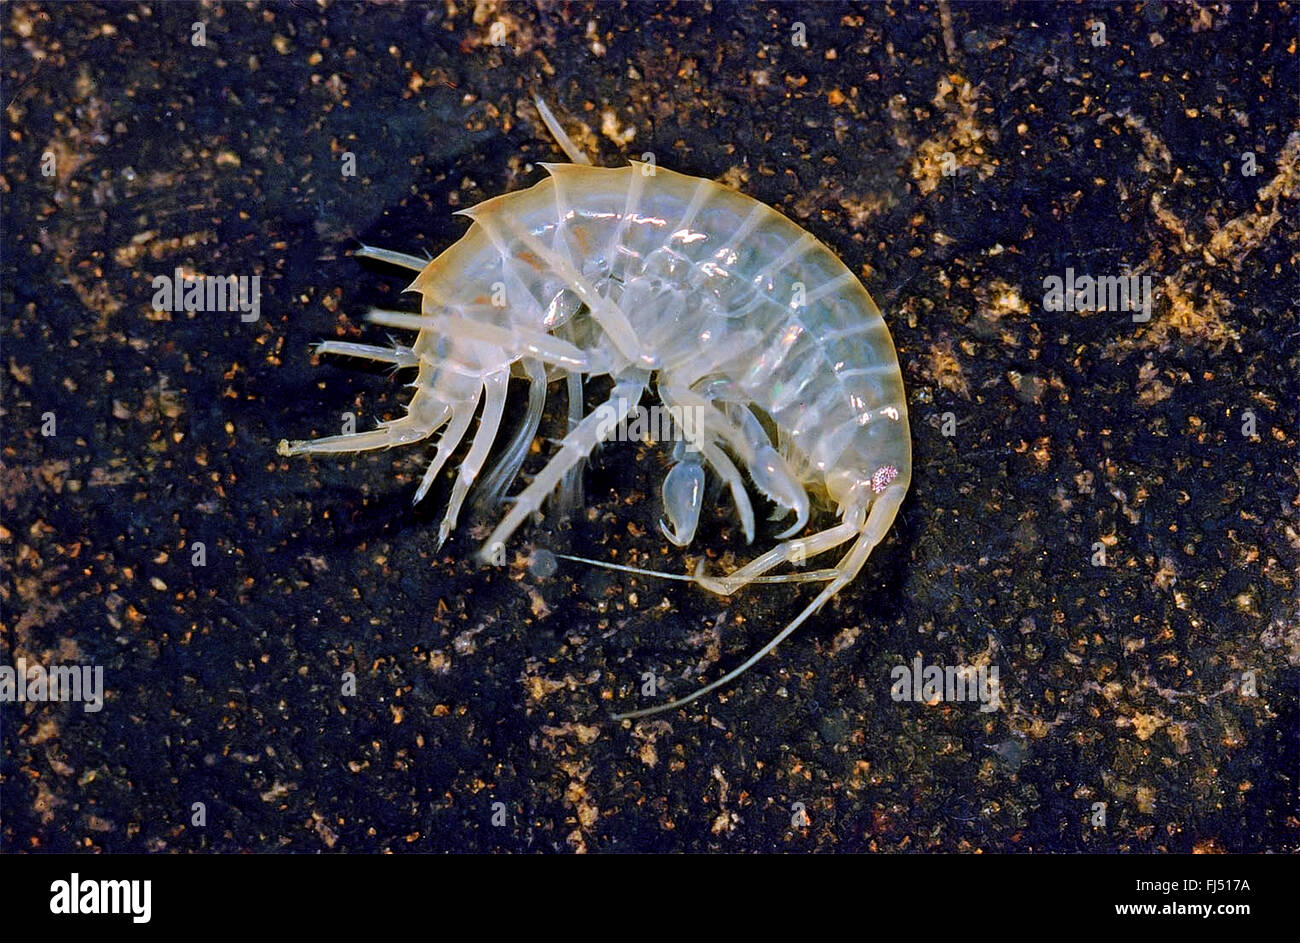 Lacustrine amphipod, Lacustrine shrimp, Freshwater shrimp, freshwater arthropod, freshwater amphipod (Gammarus roeseli), lys on a stone, Germany Stock Photo